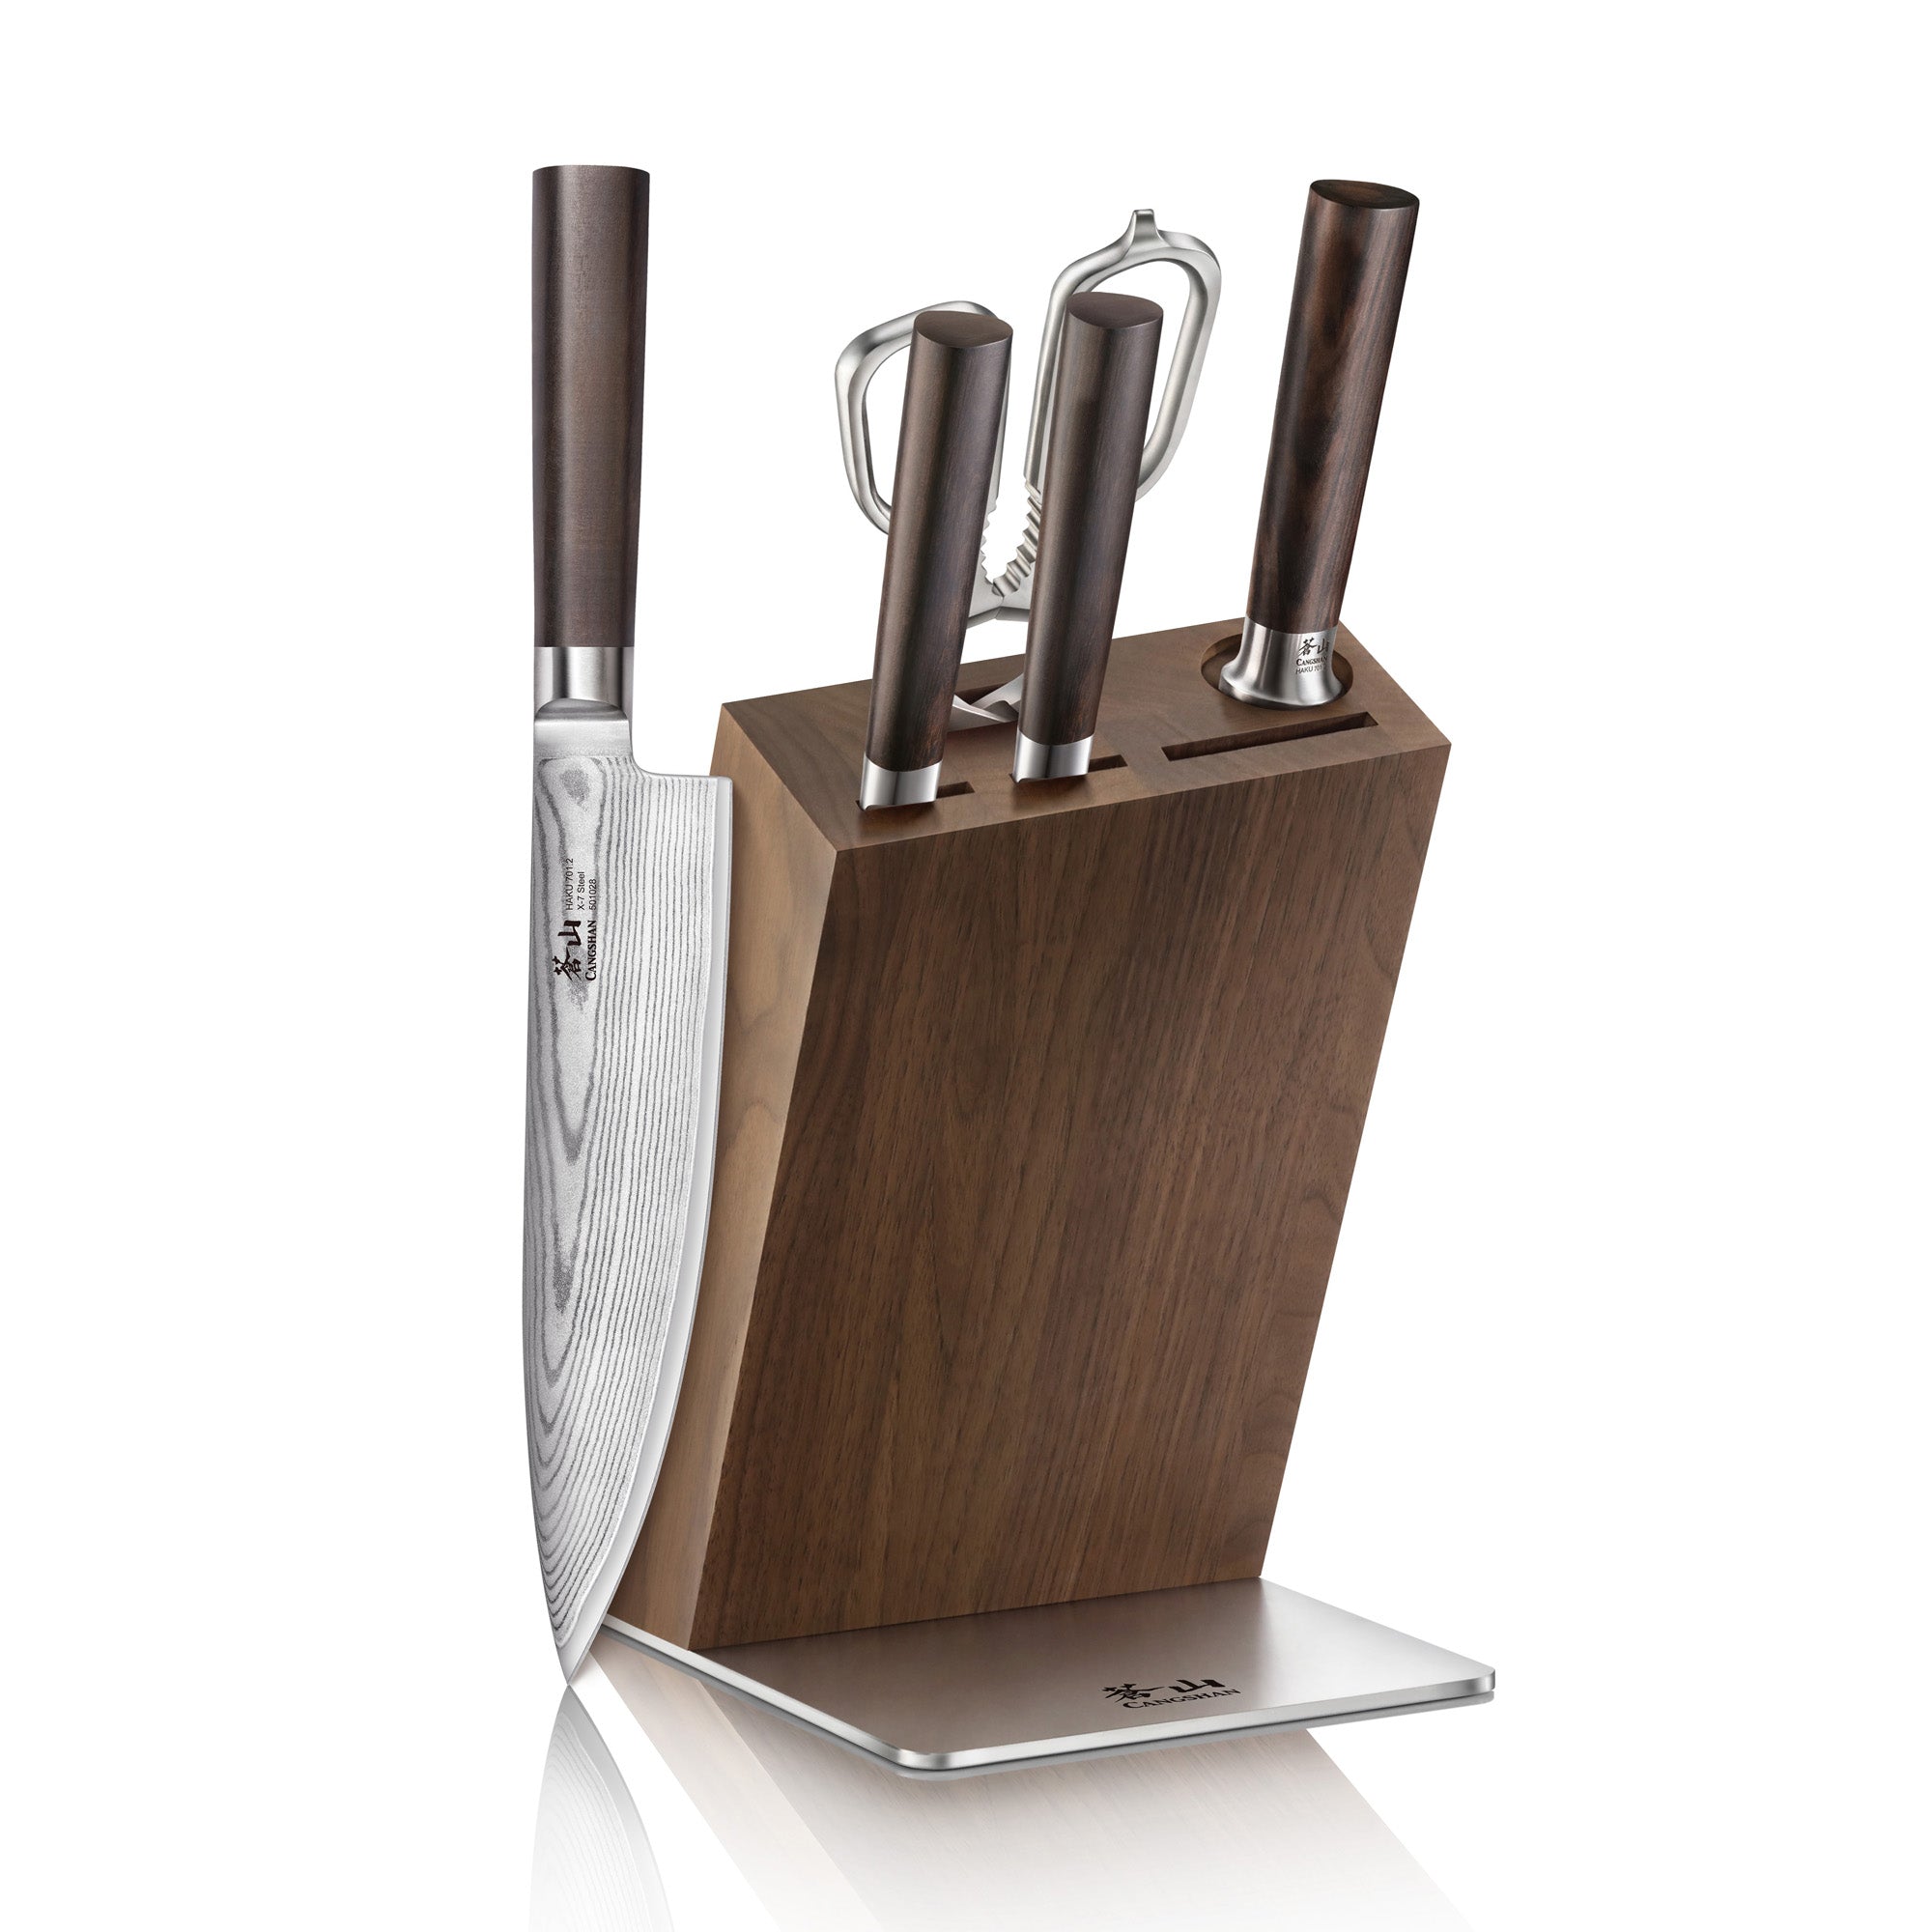 Cangshan Haku Series 9in High Carbon Honing Steel - Bear Claw Knife & Shear